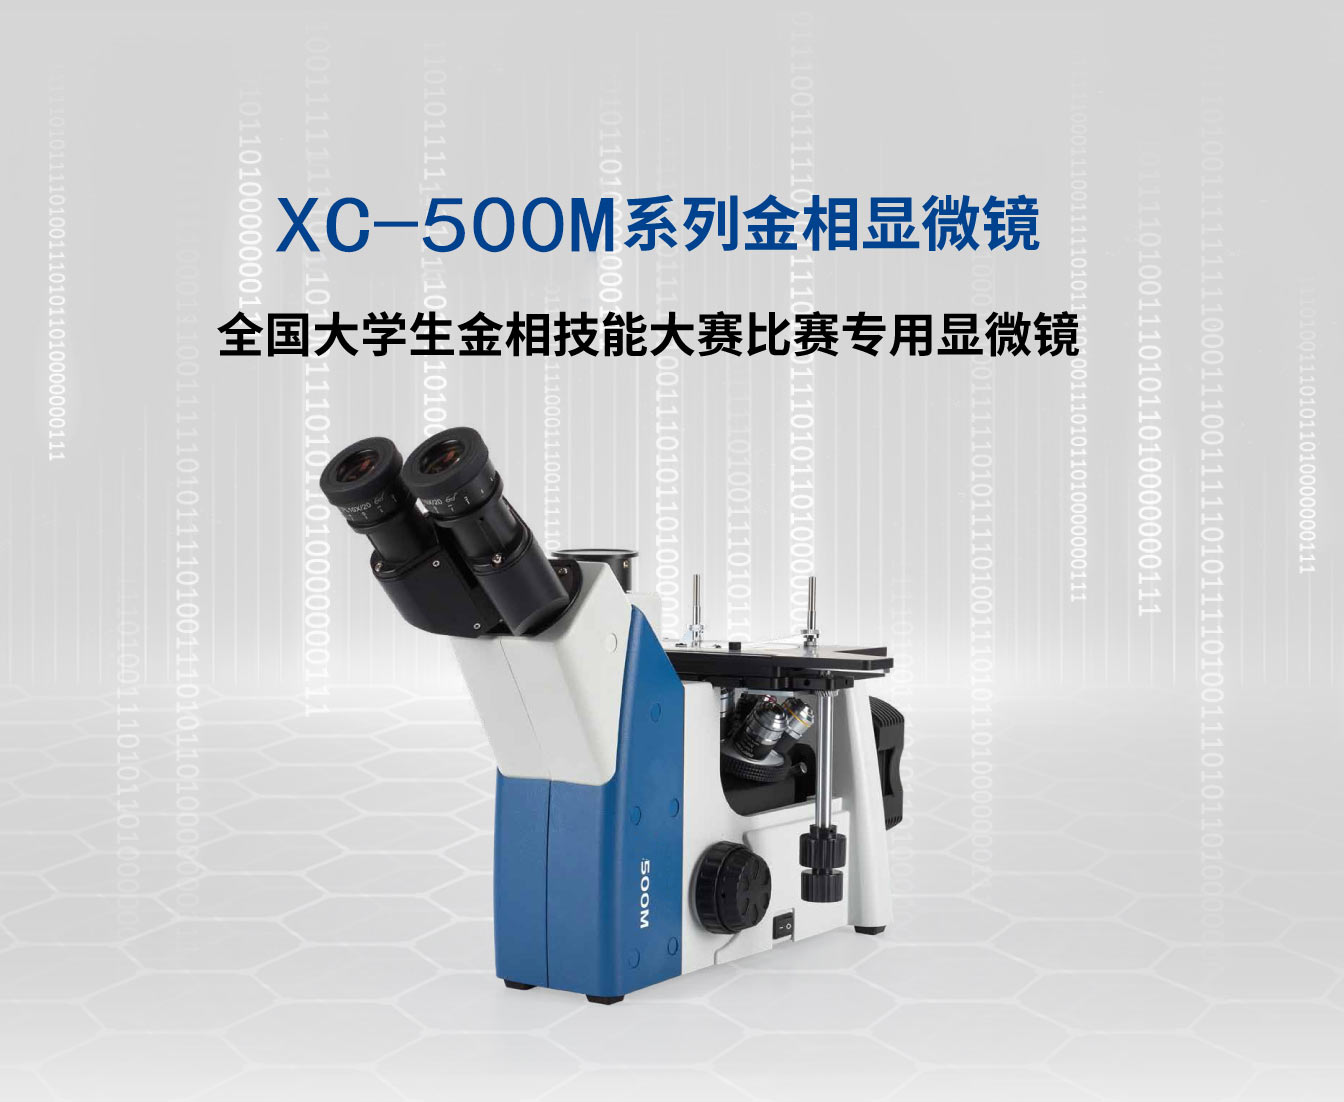 XC-500M_01.jpg